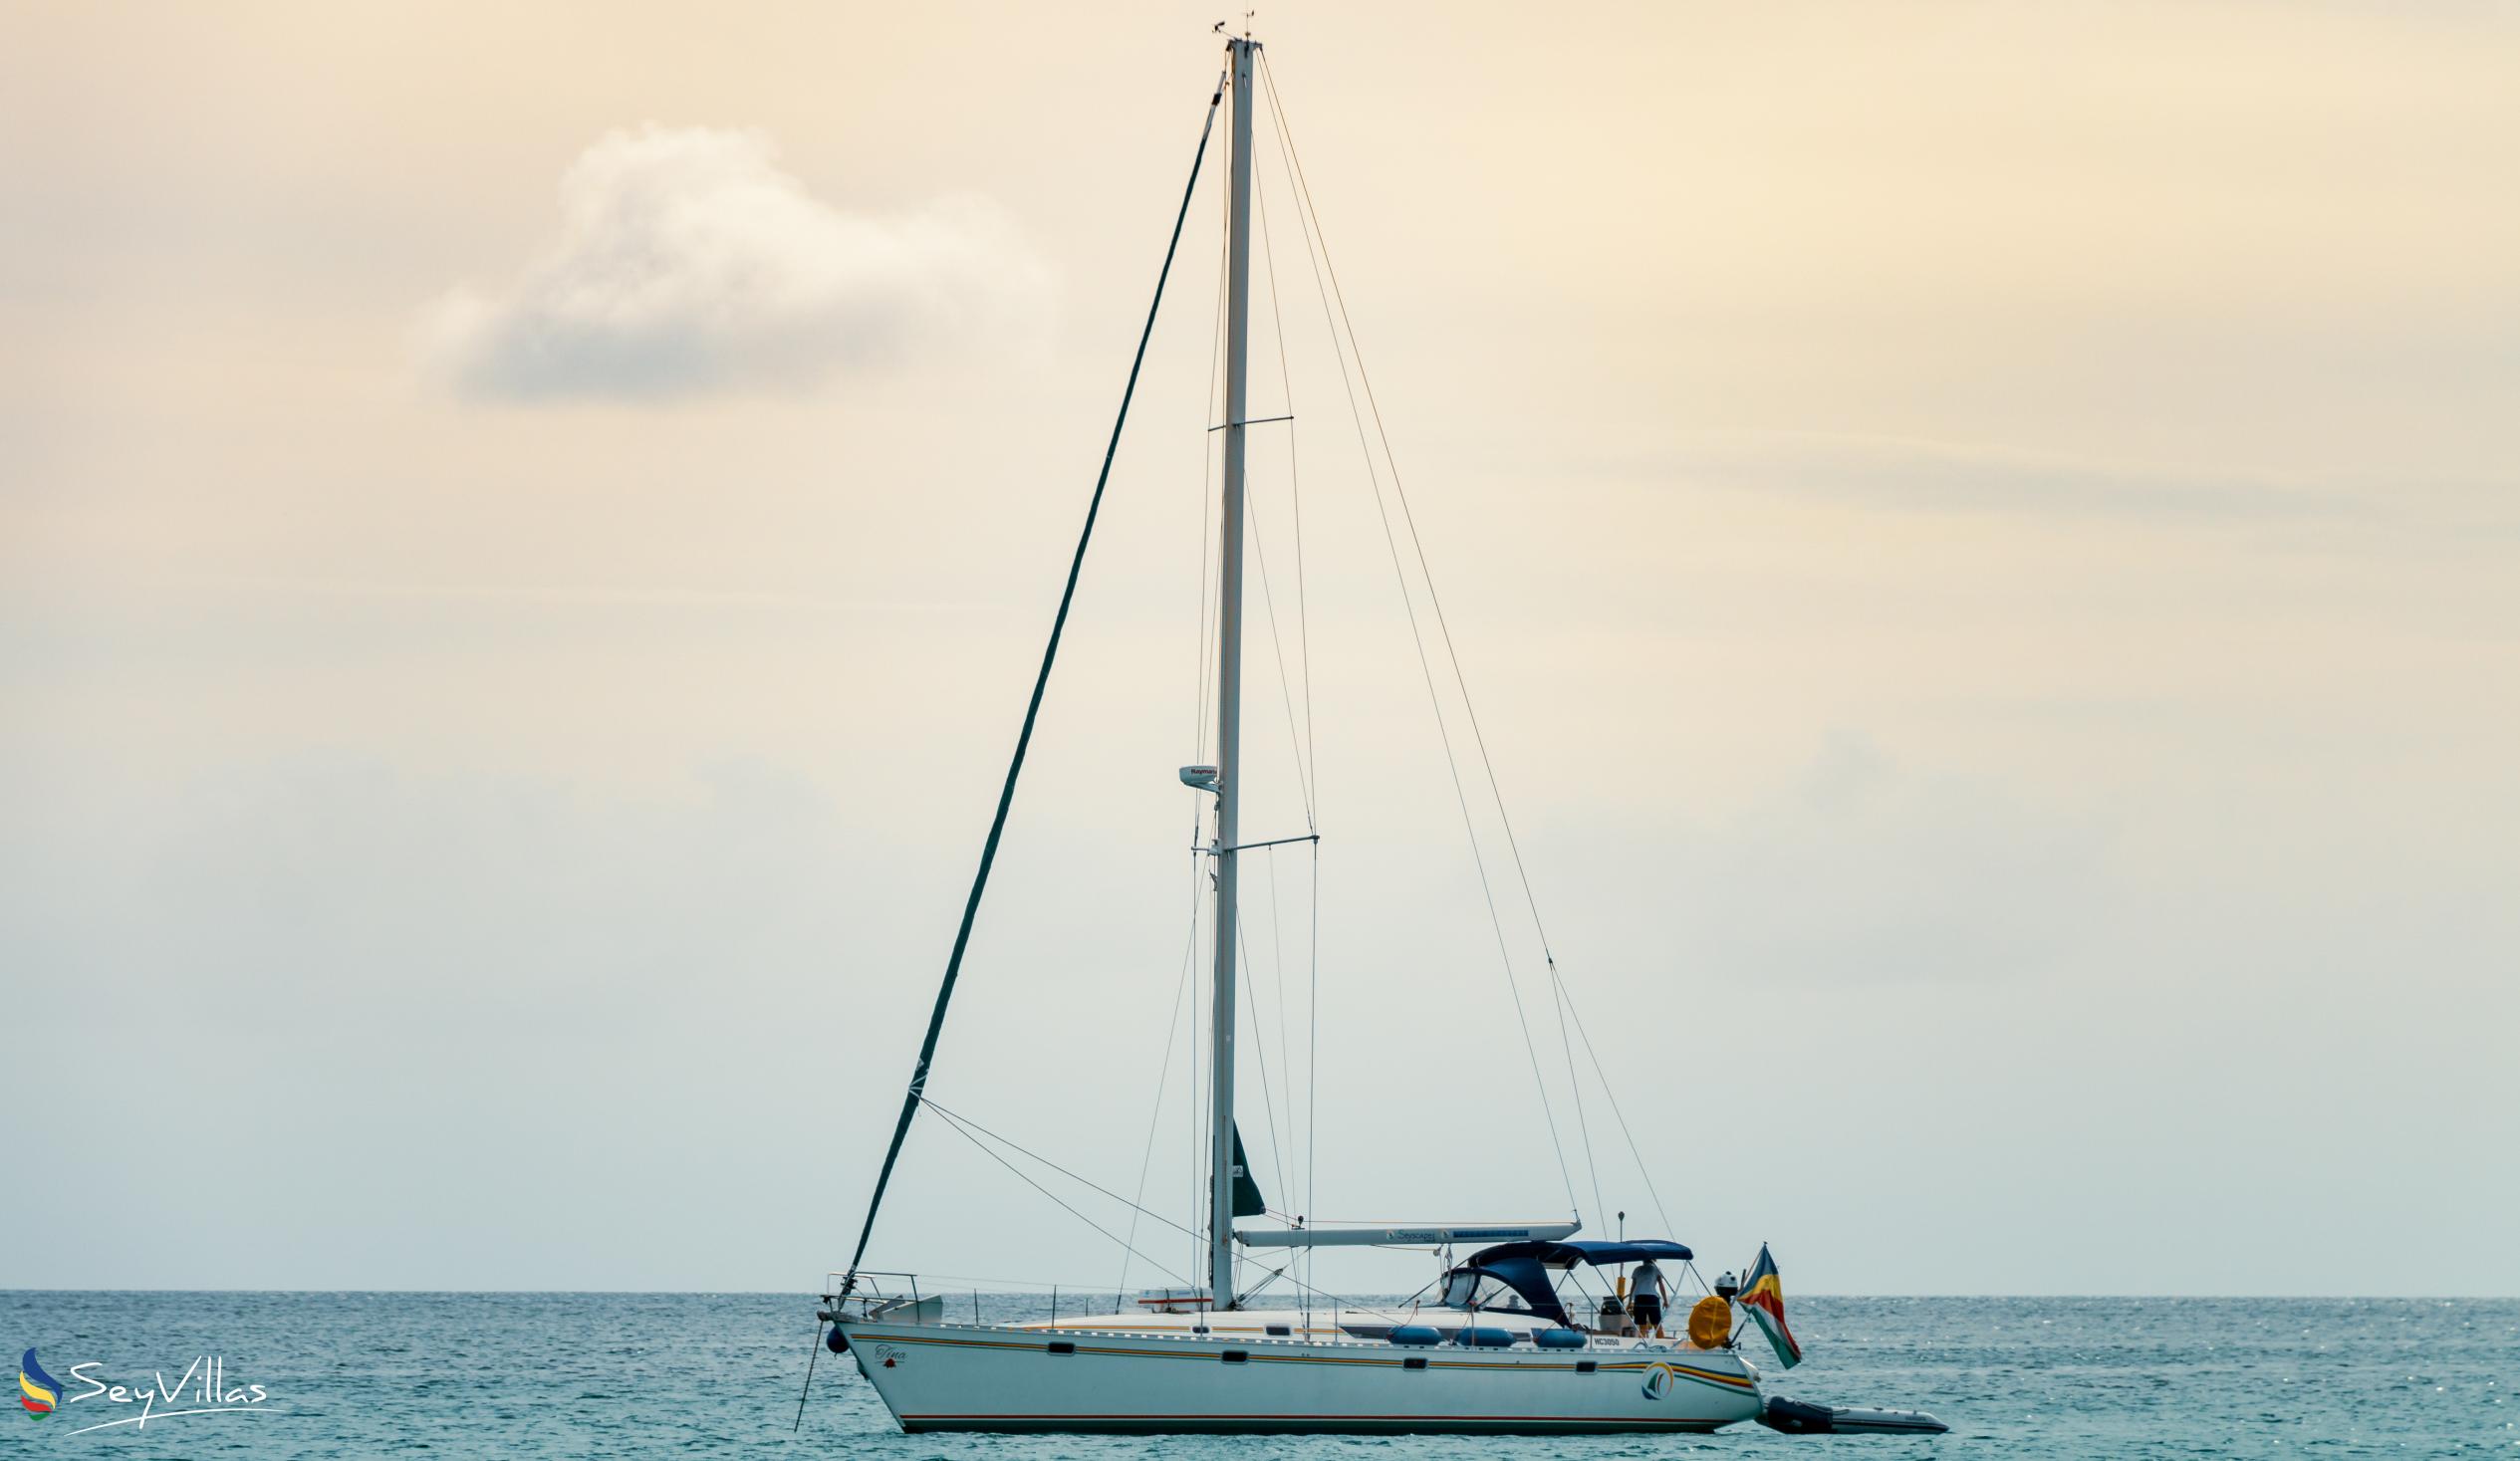 Photo 5: Seyscapes Yacht Charter - Outdoor area - Seychelles (Seychelles)